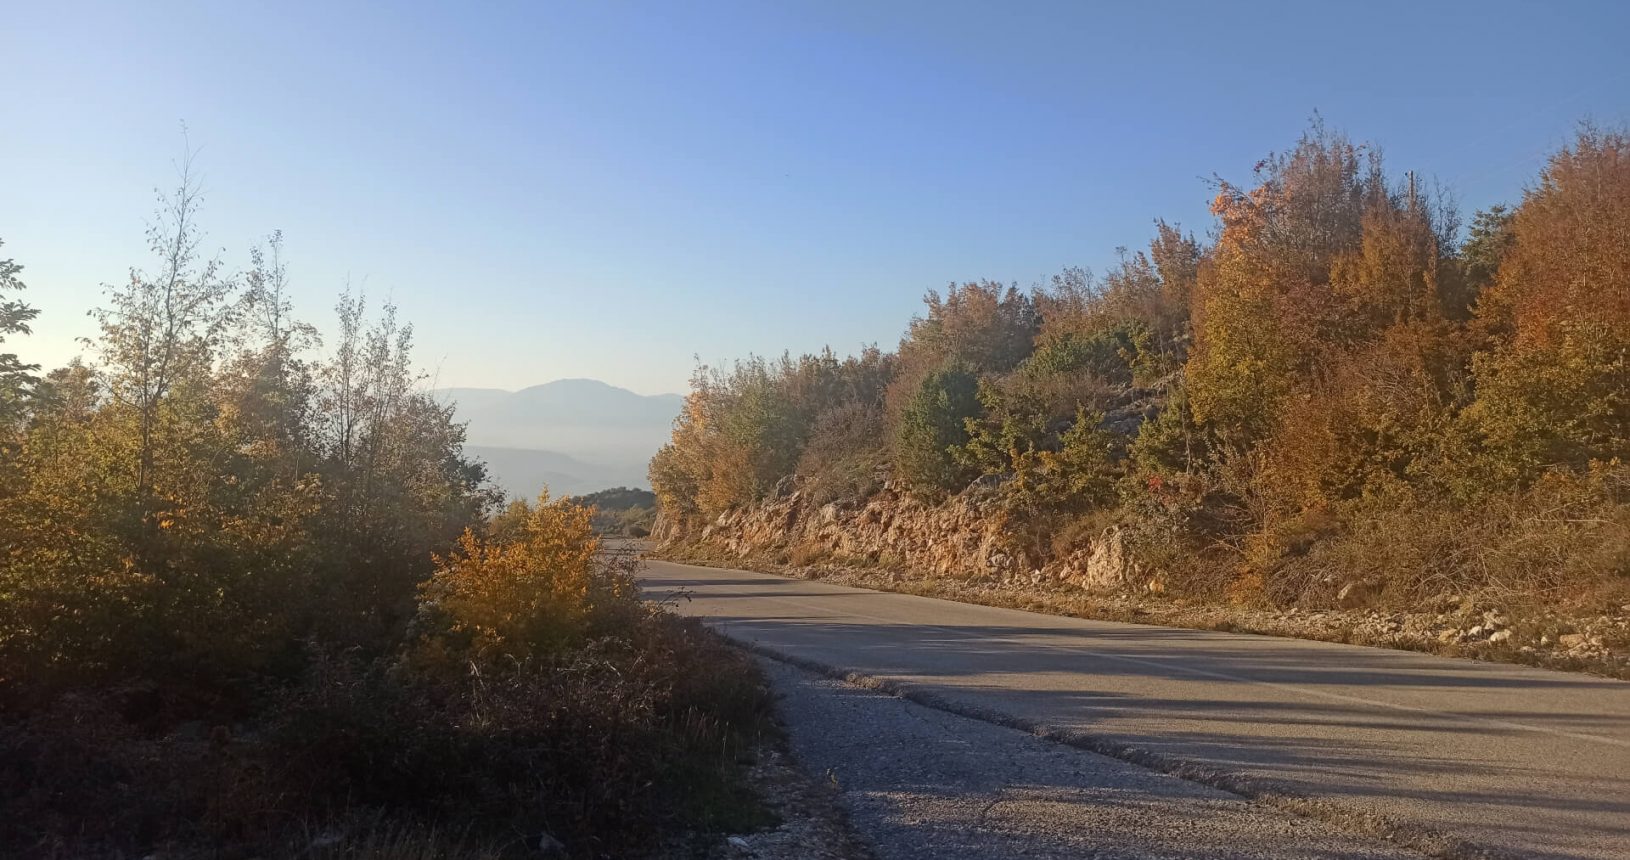 The road near Viewpoint Kuk Ledinski